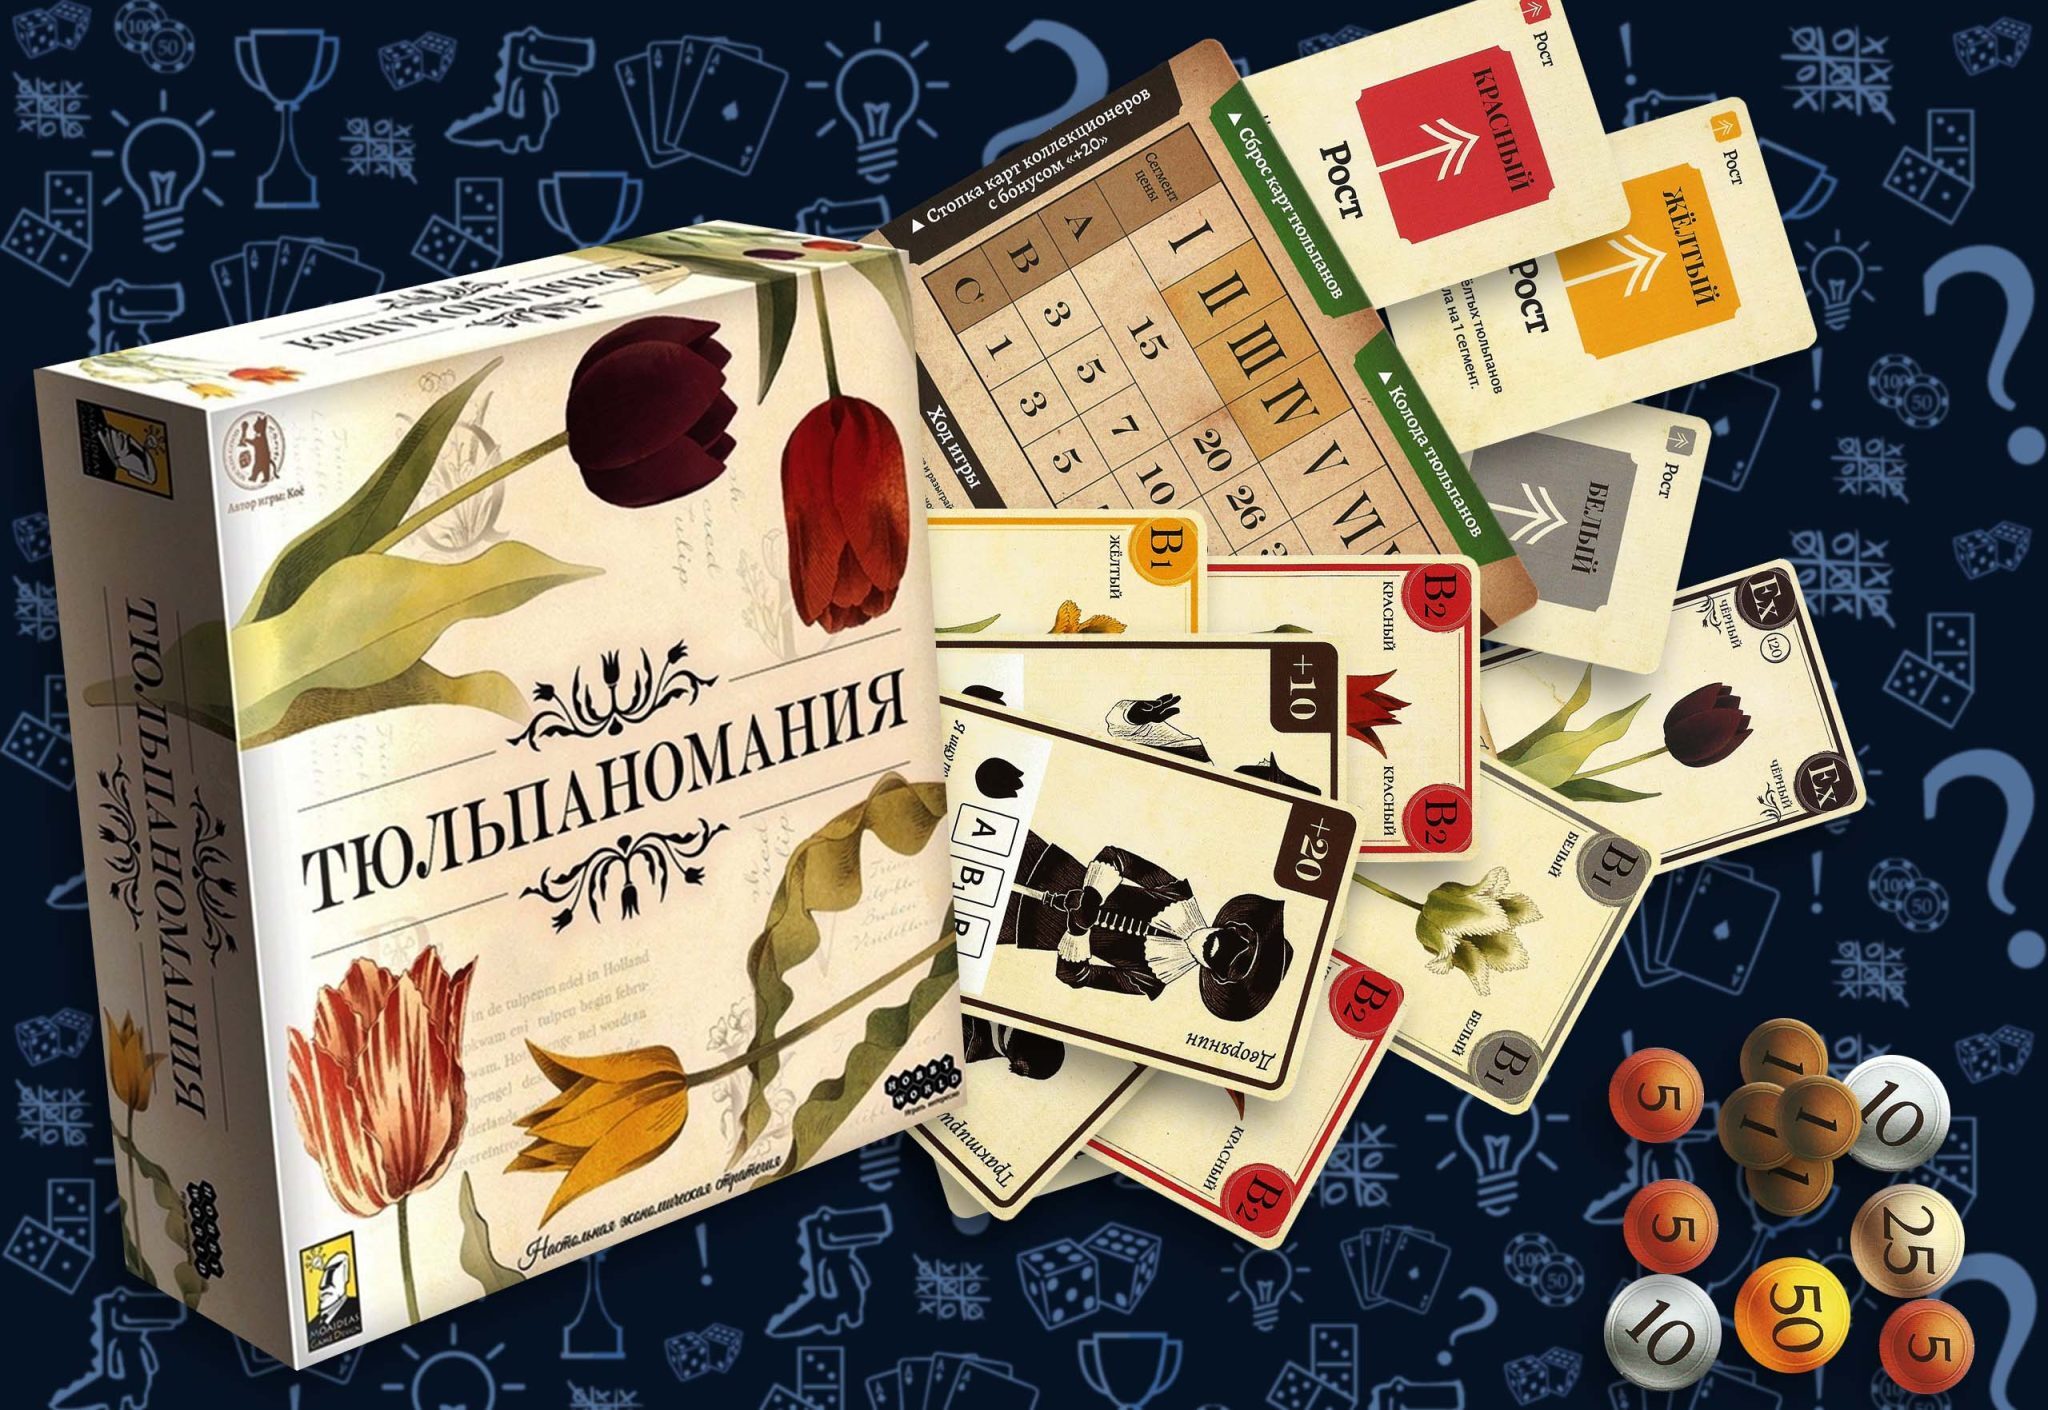 Tulipmania board game - My, Board games, Hobby, Longpost